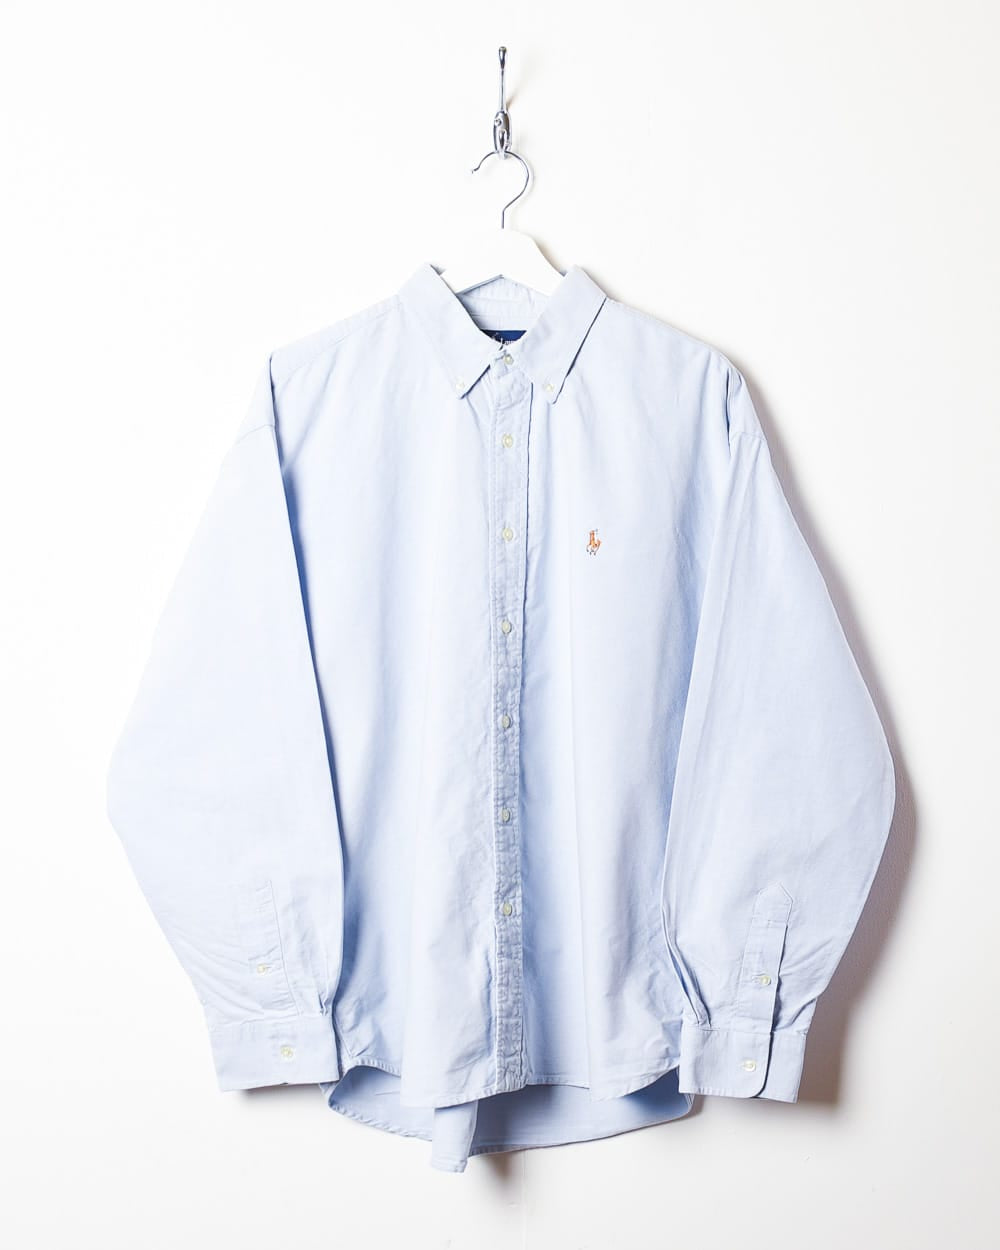 BabyBlue Polo Ralph Lauren Yarmouth Shirt - X-Large